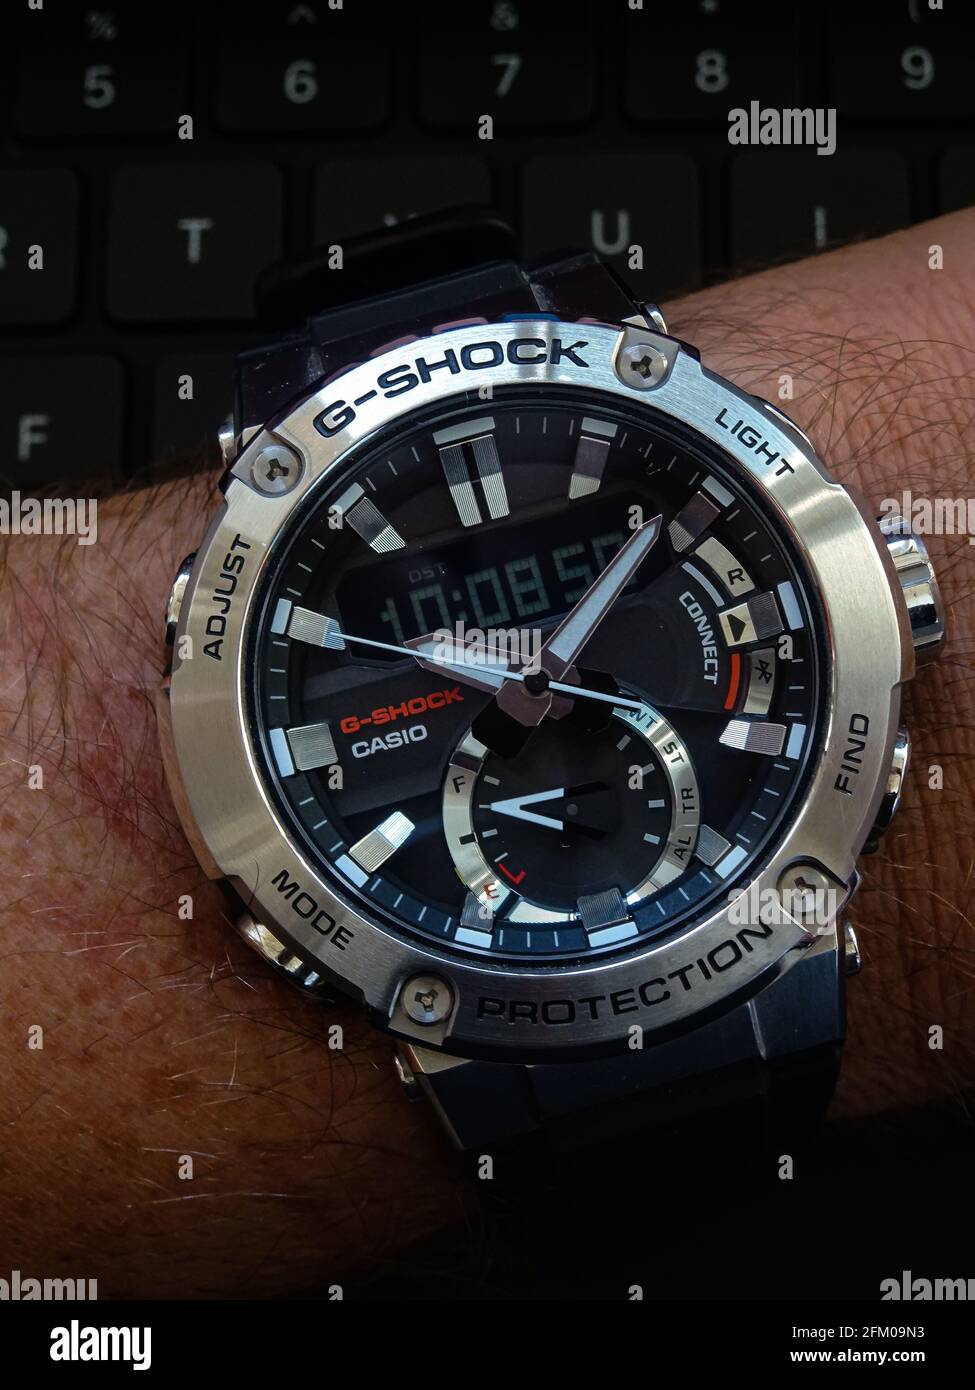 Casio GST-B200 solar atomic bluetooth multi-band 6 wrist watch on a  silicone band on black keyboard background Stock Photo - Alamy